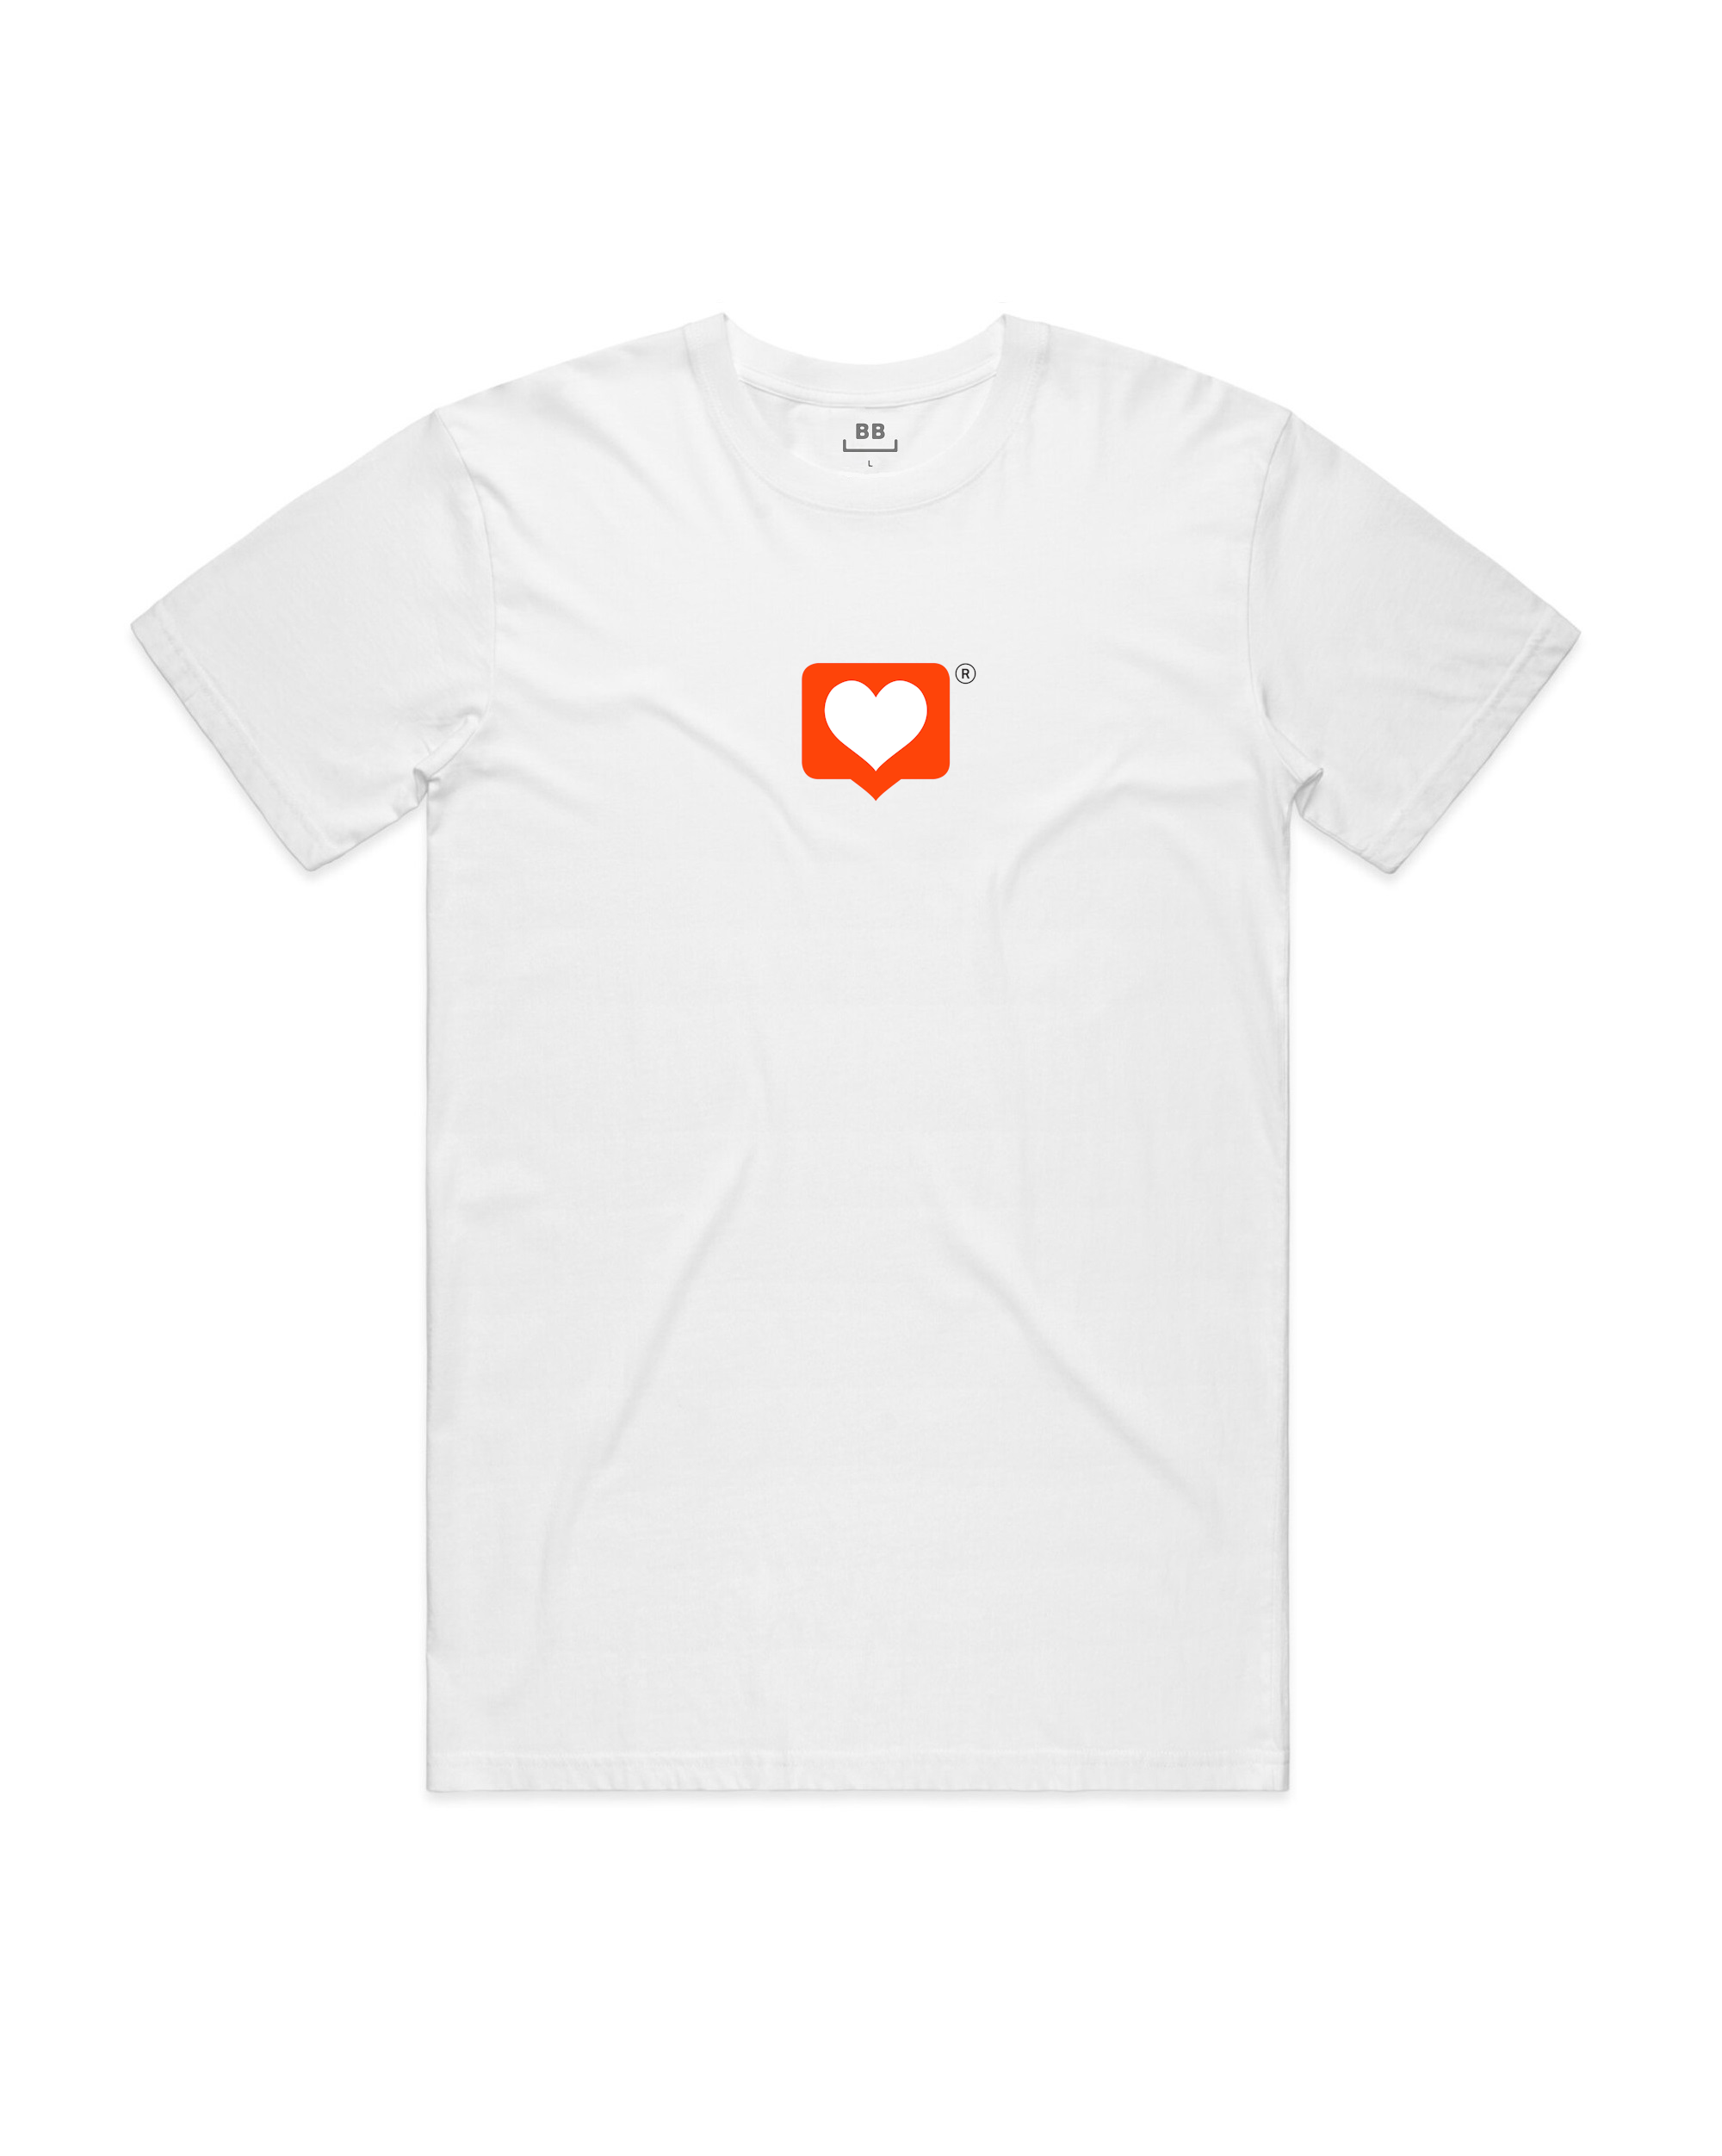 Love Clothing Co 'Heart' White Tee